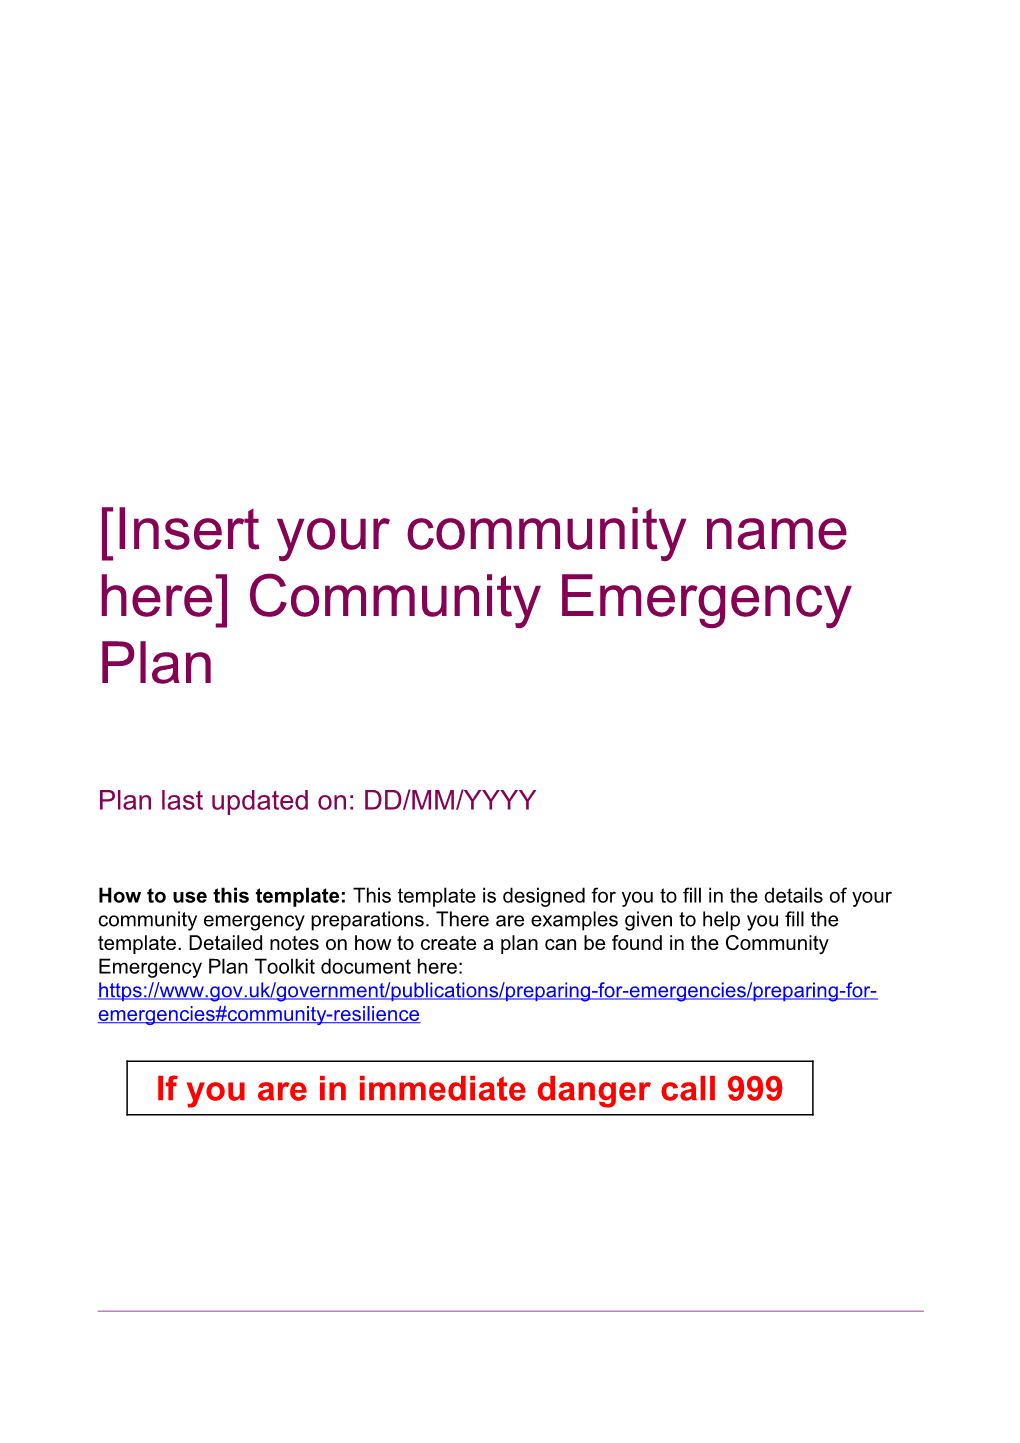 Insert Your Community Name Here Community Emergency Plan